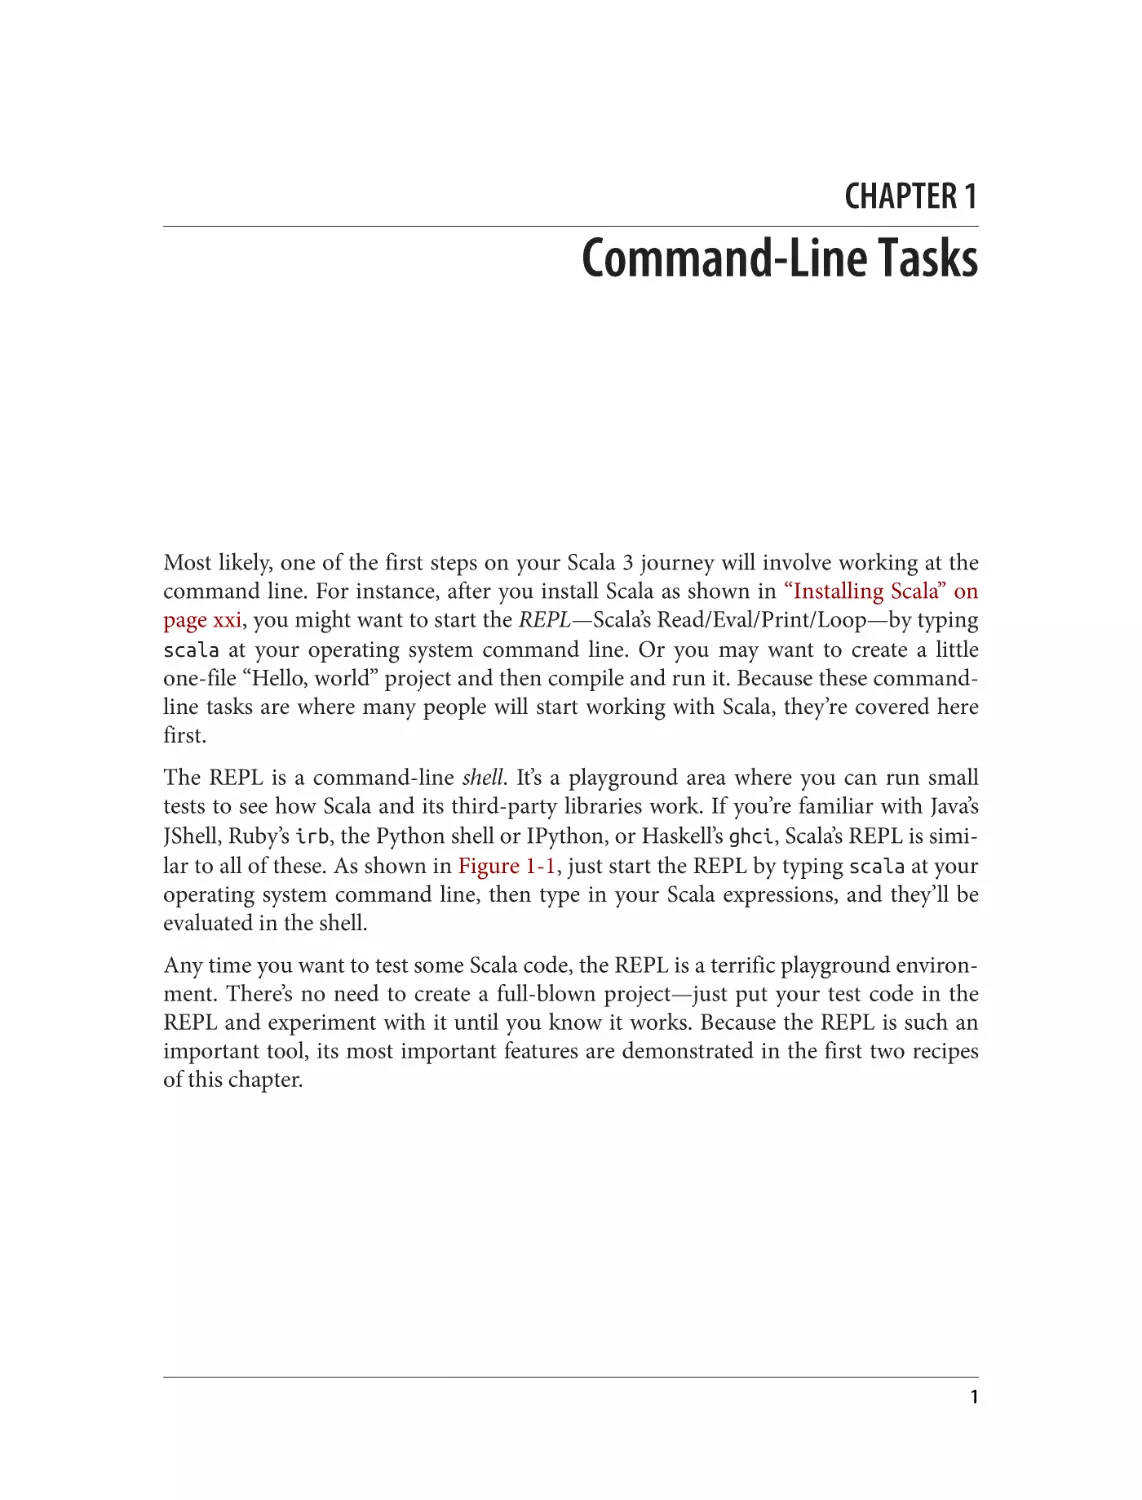 Chapter 1. Command-Line Tasks